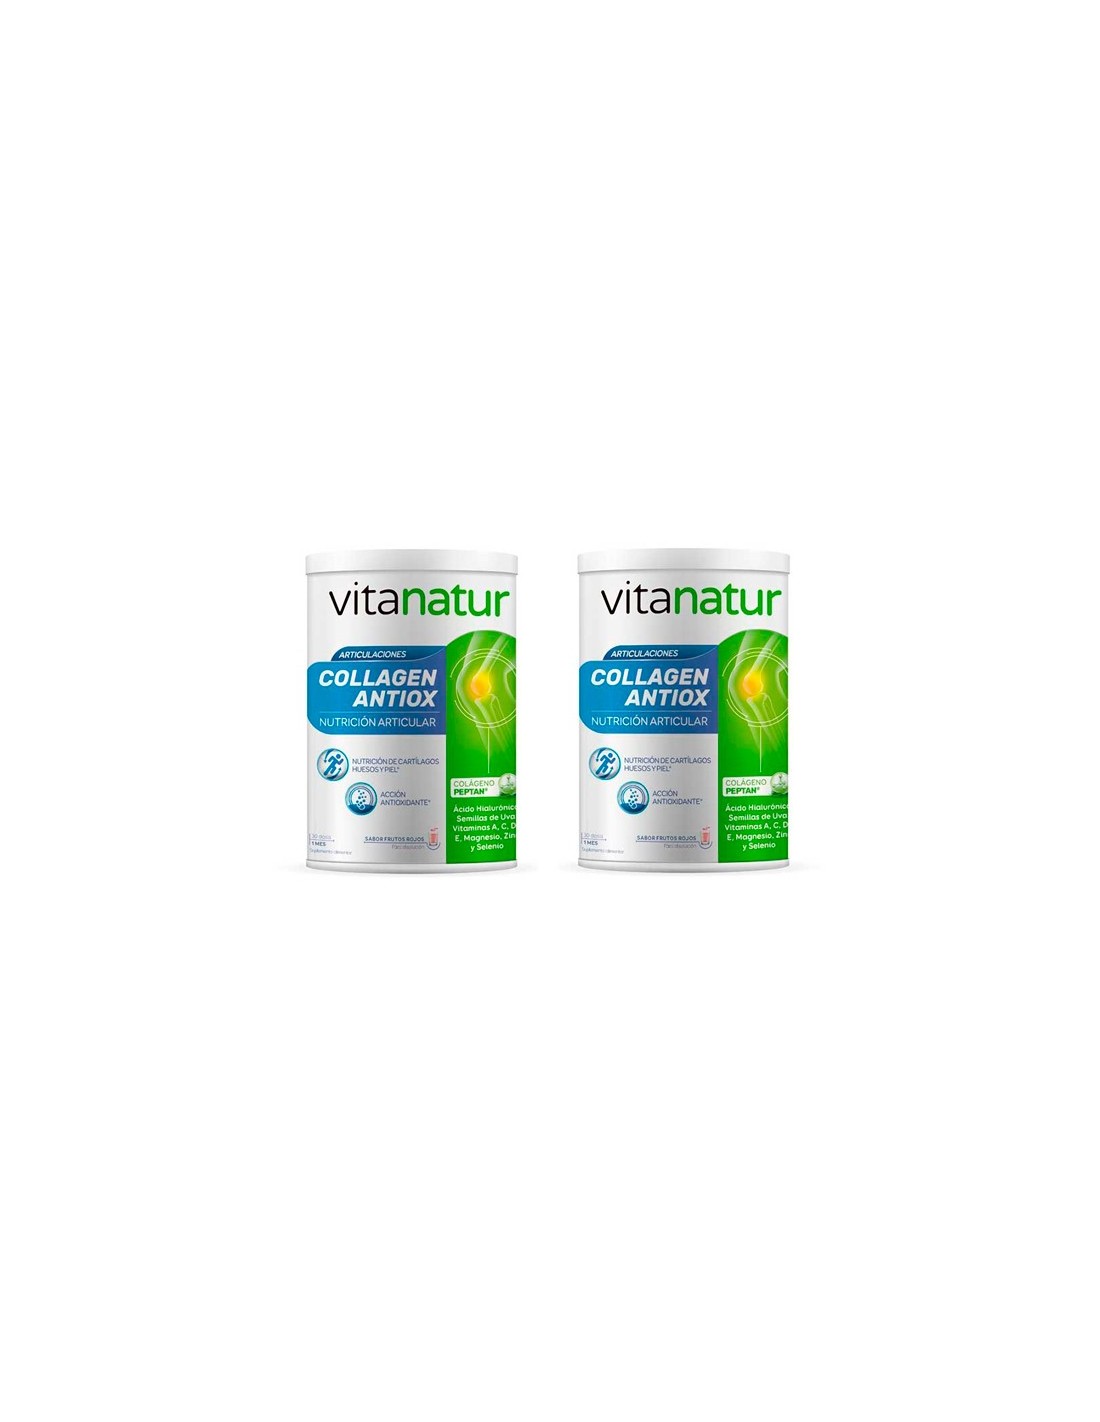 Vitanatur Collagen Antiox Duplo Sabor Frutos Rojos 360g+360g